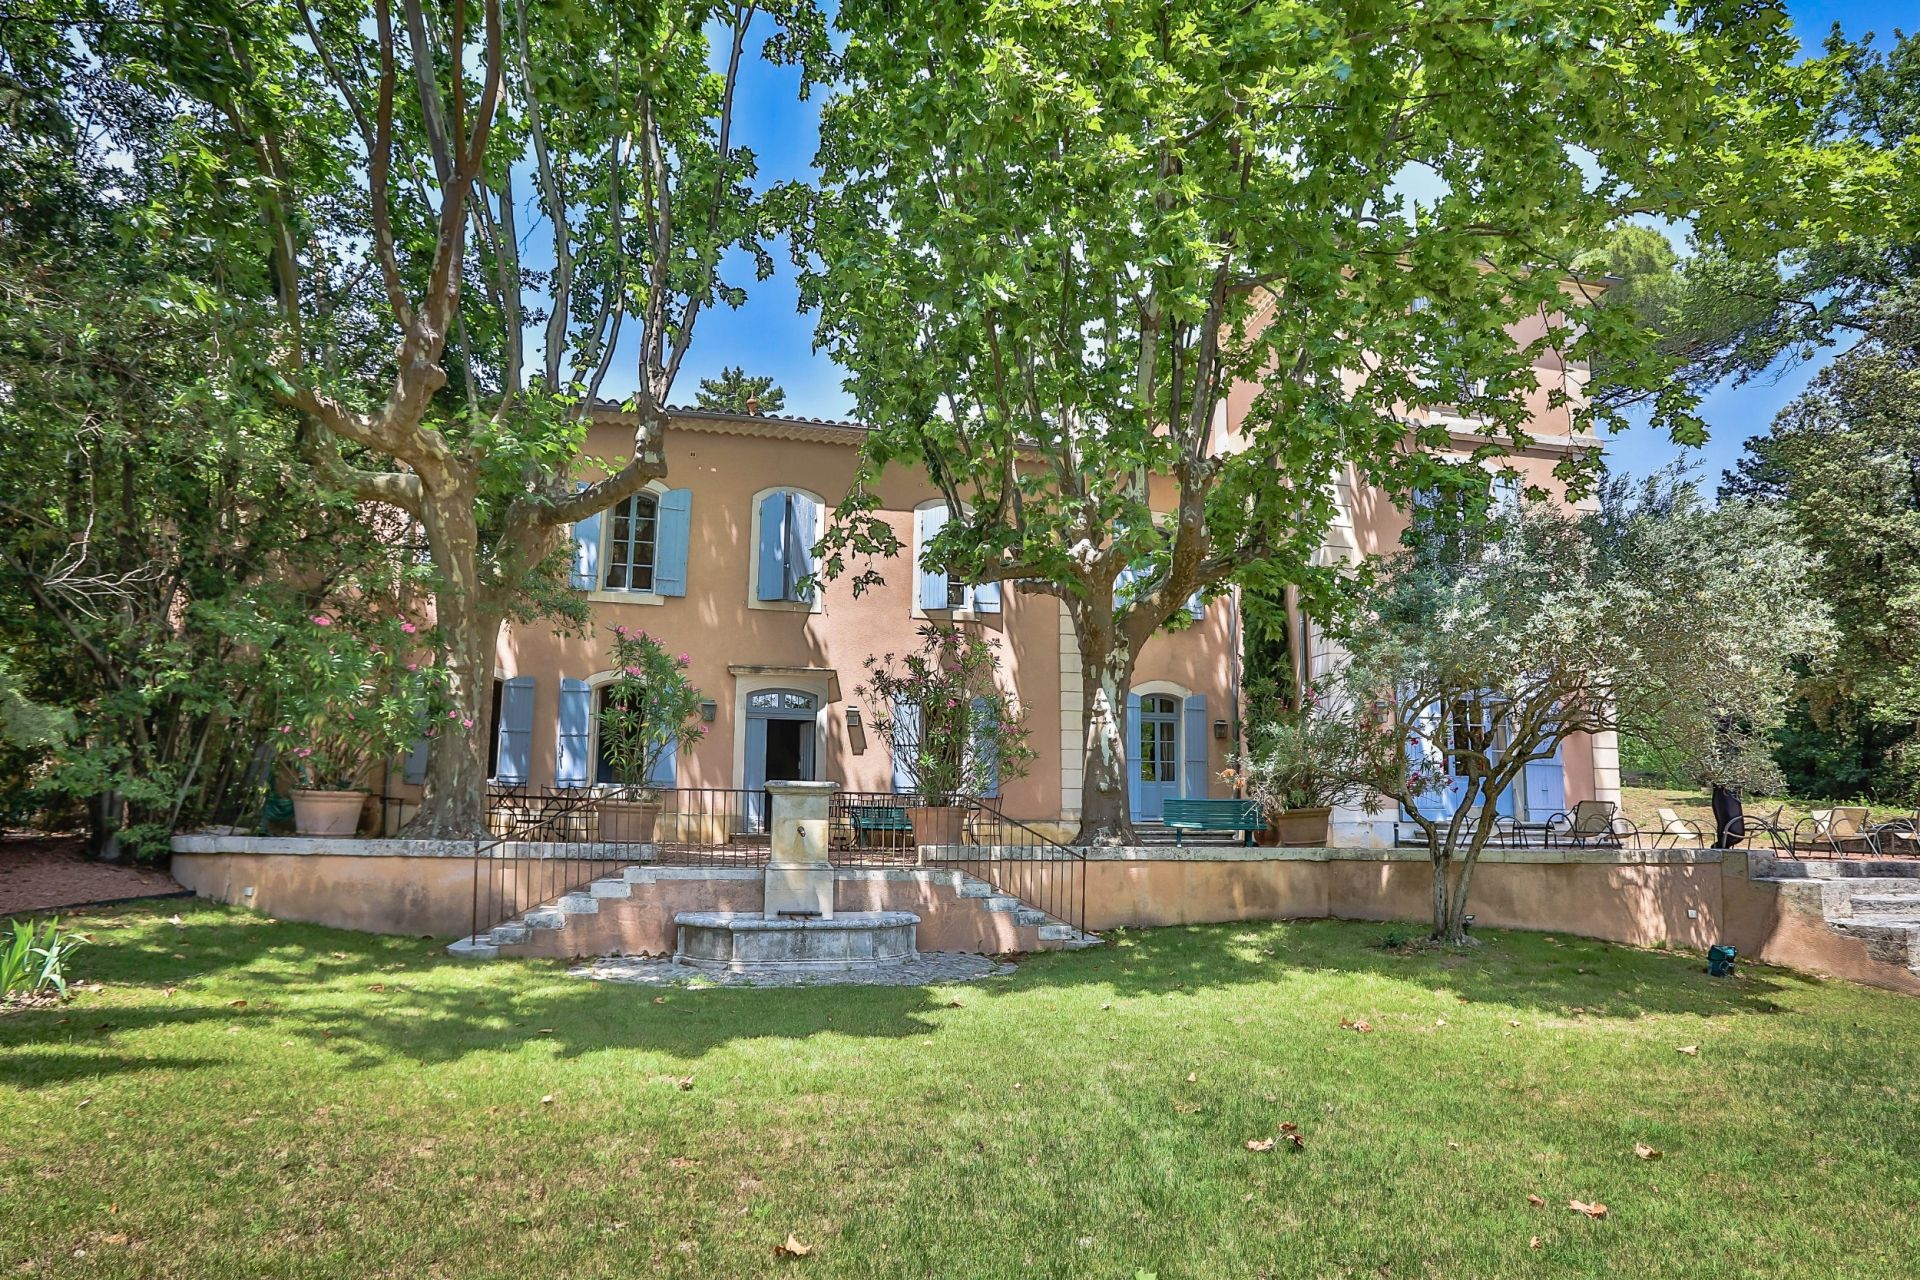 Sale House Valréas 18 Rooms 540 m² - Provence Luberon Sotheby's ...